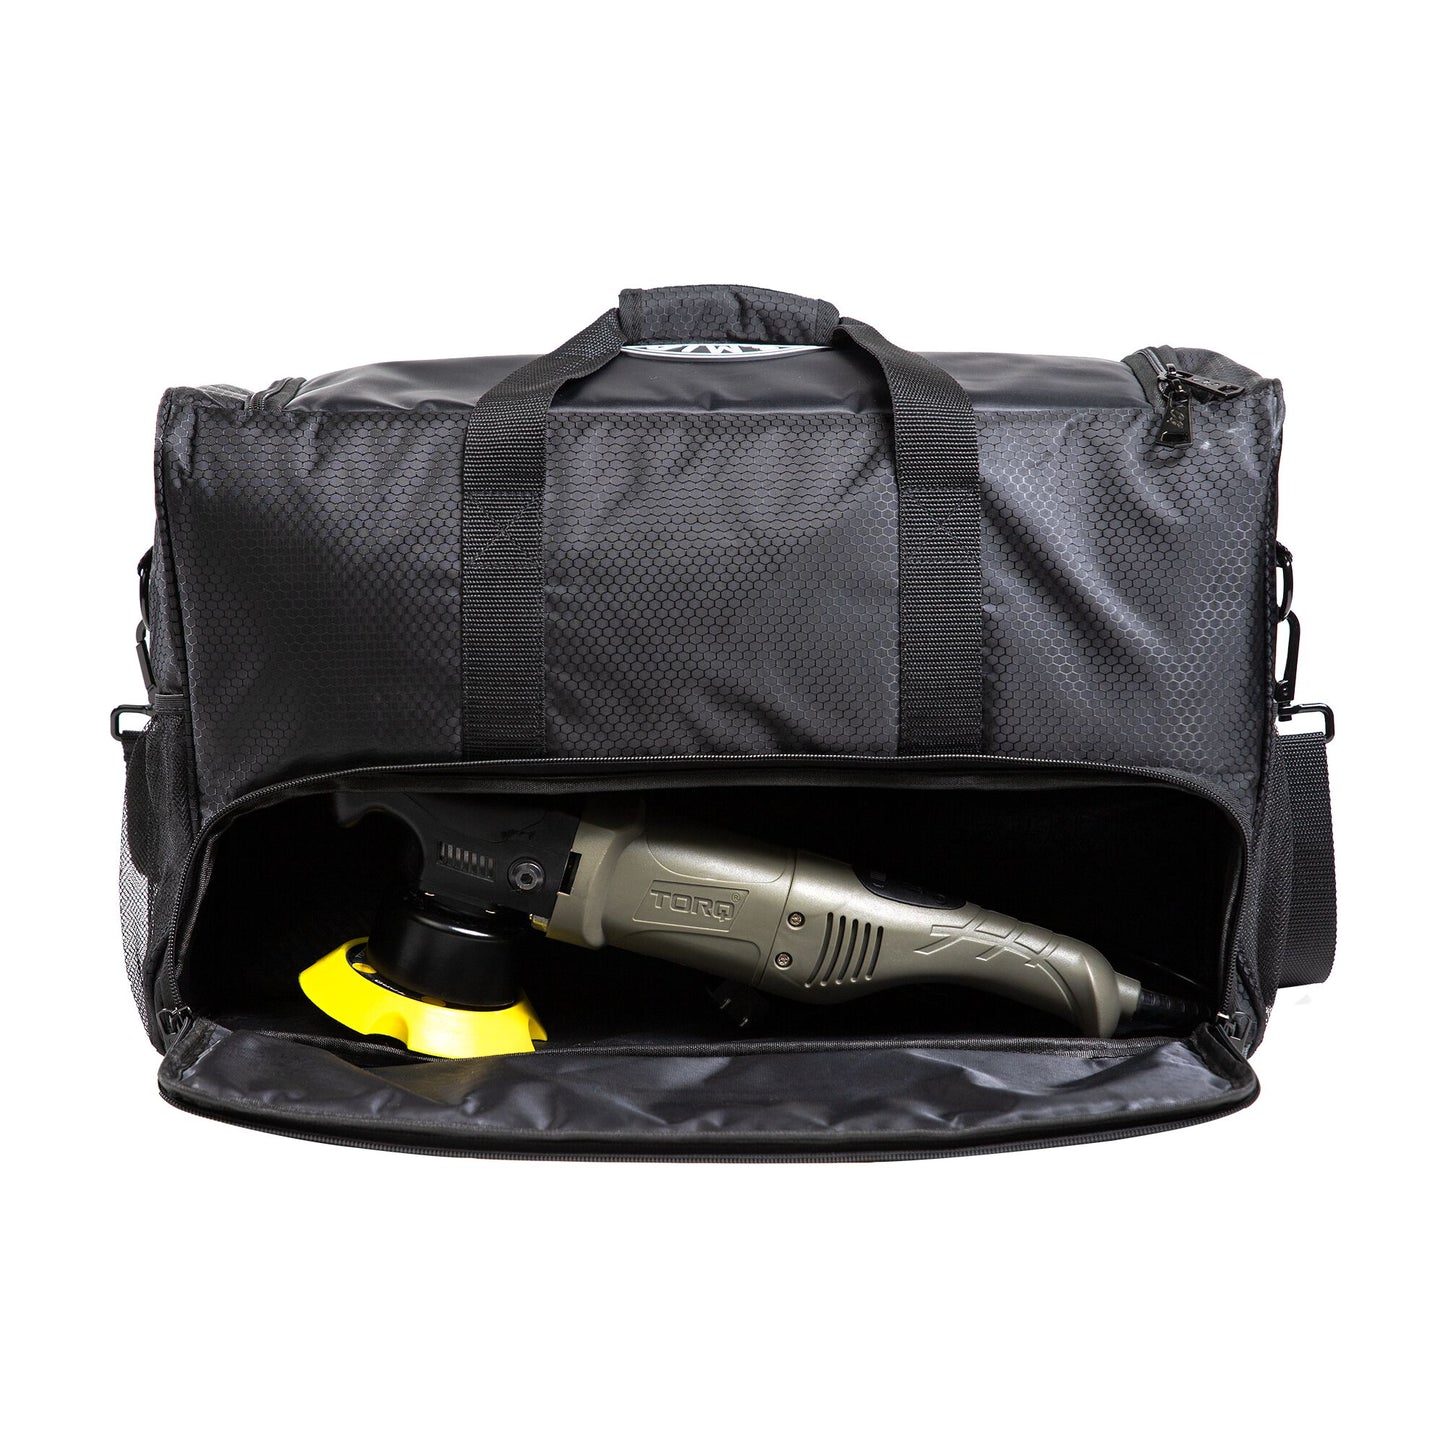 Frequent Use 4 Step TORQ 10FX Orbital Polisher Ultimate Kit w/ Arsenal Organizer Bag